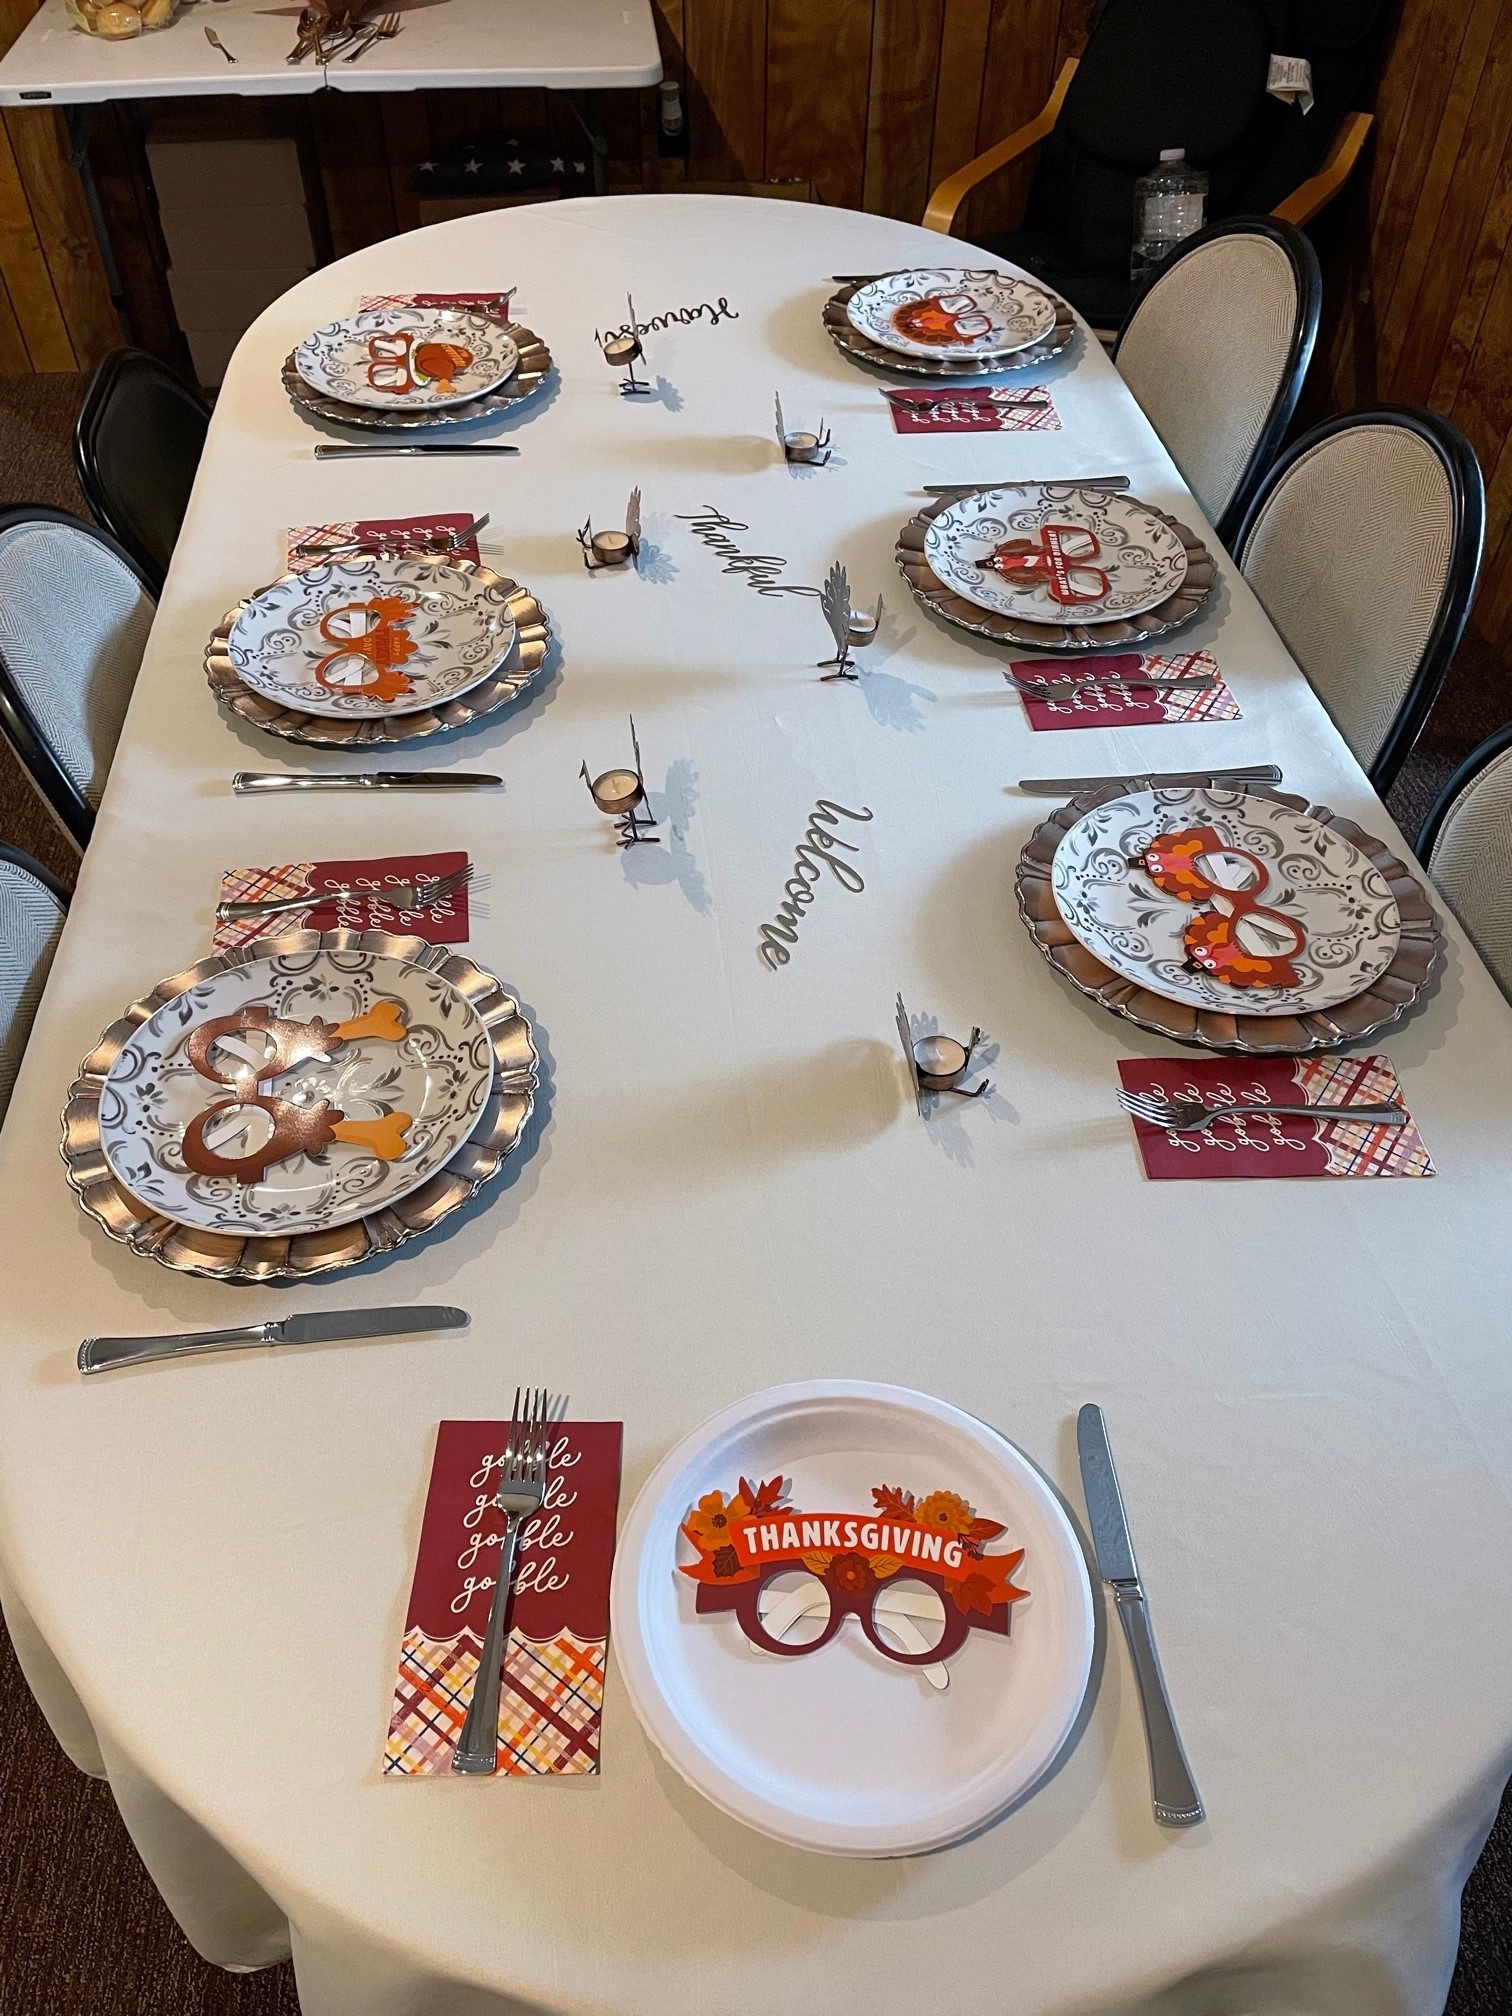 Thanksgiving Dinner Table Set at PDQ